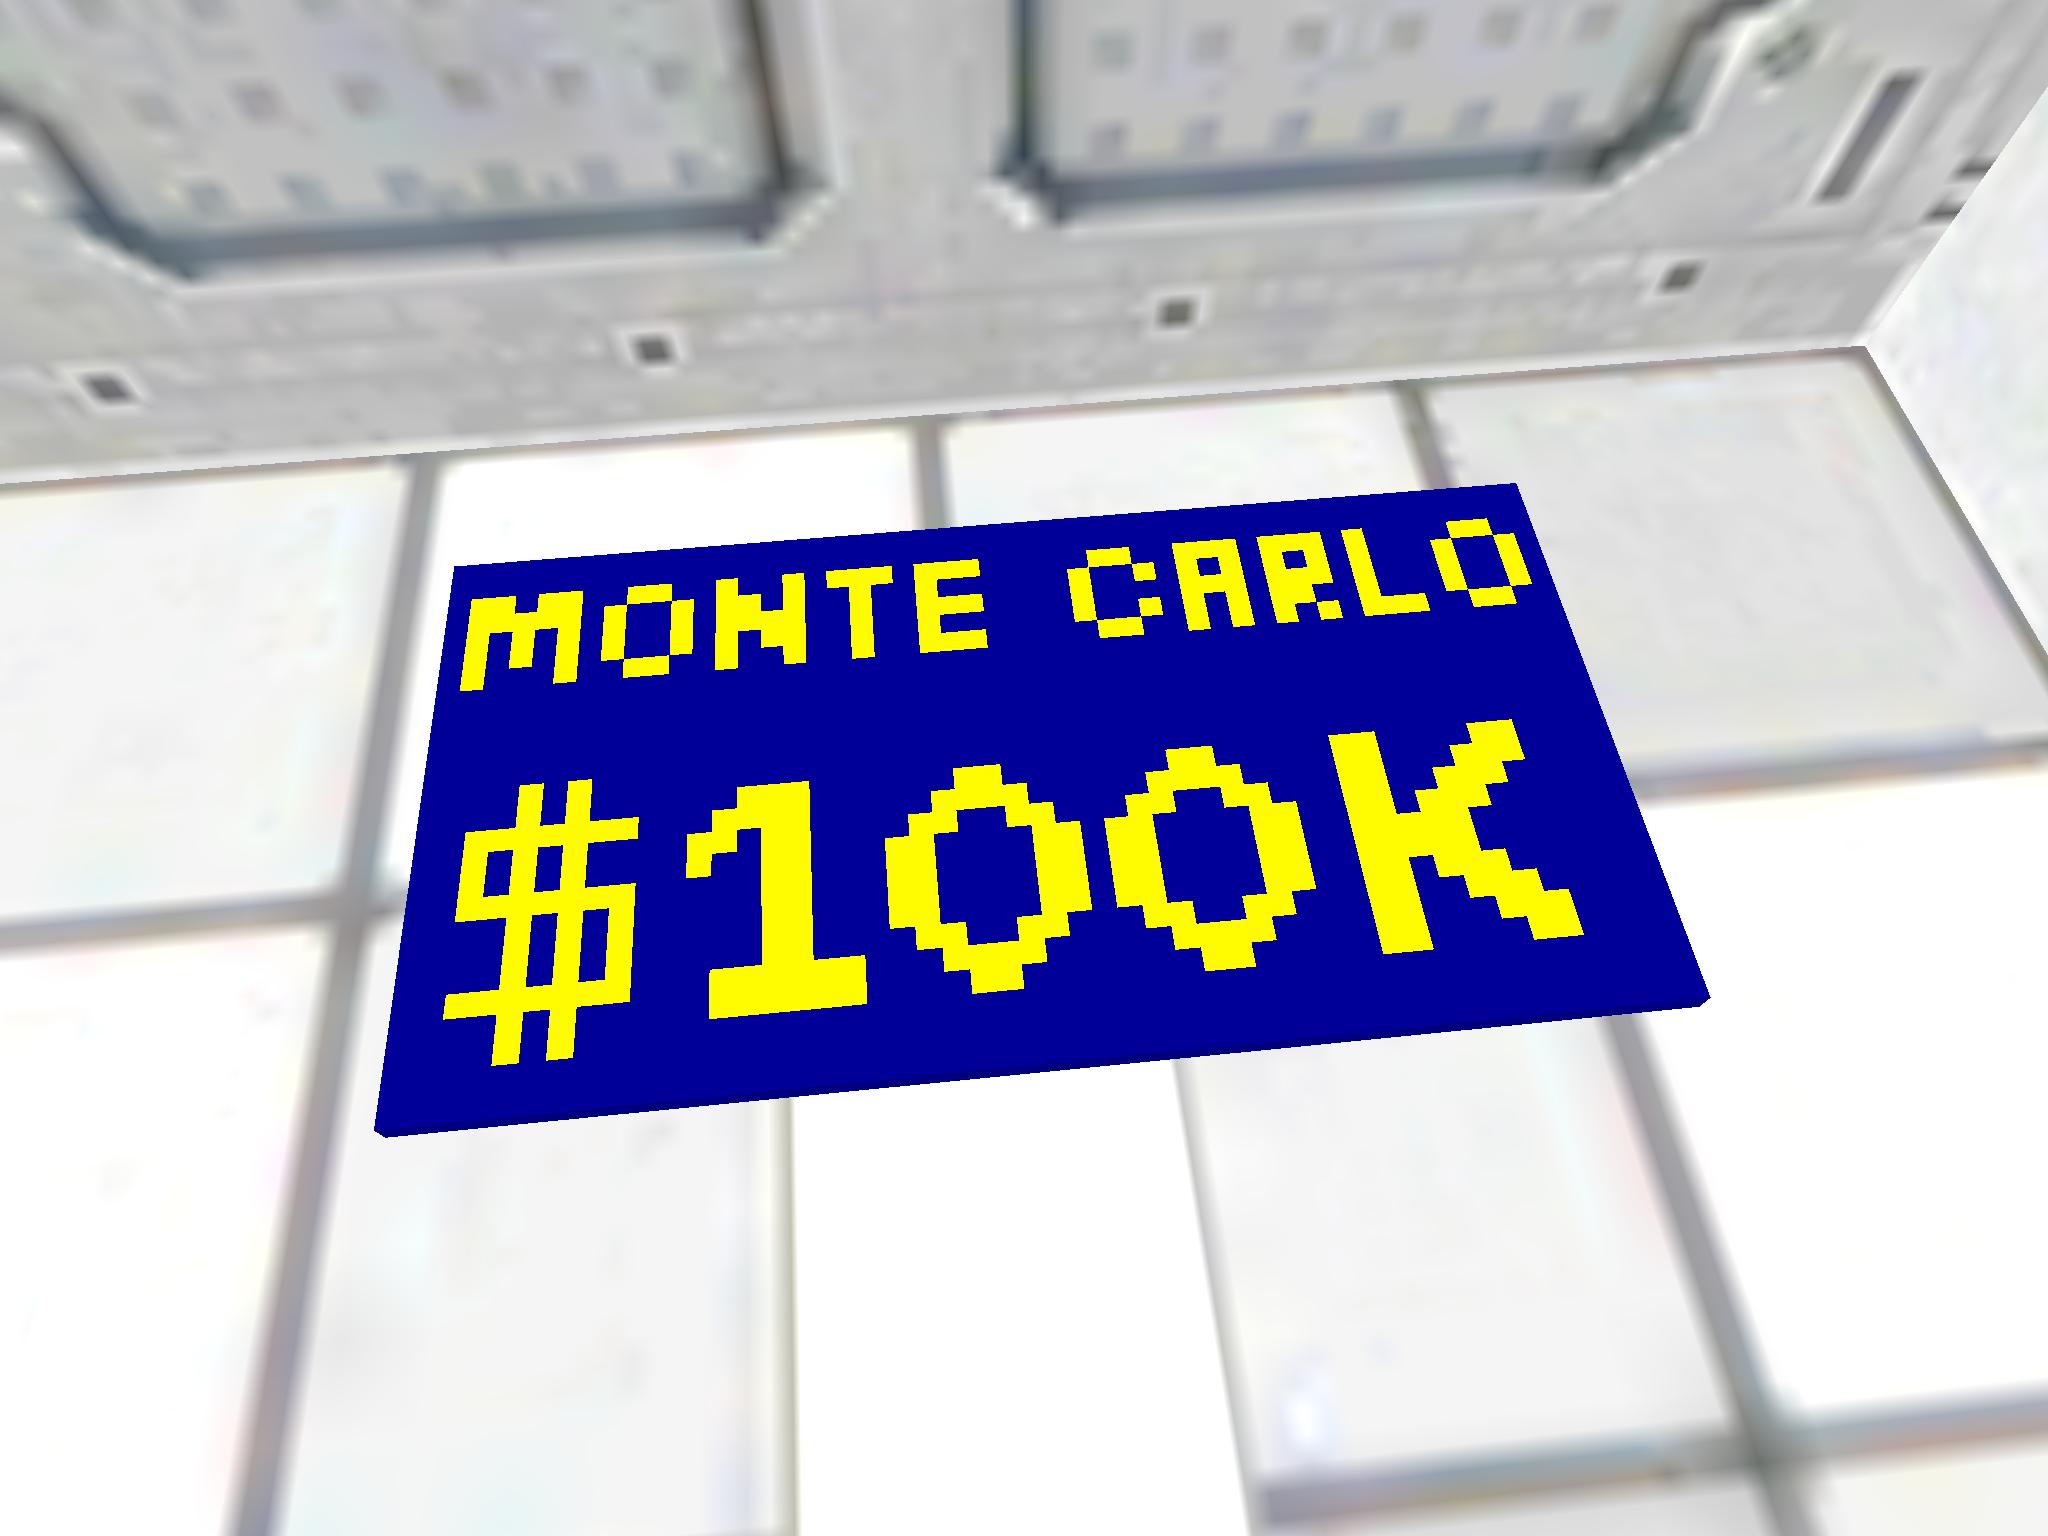 Monte Carlo Poker chip